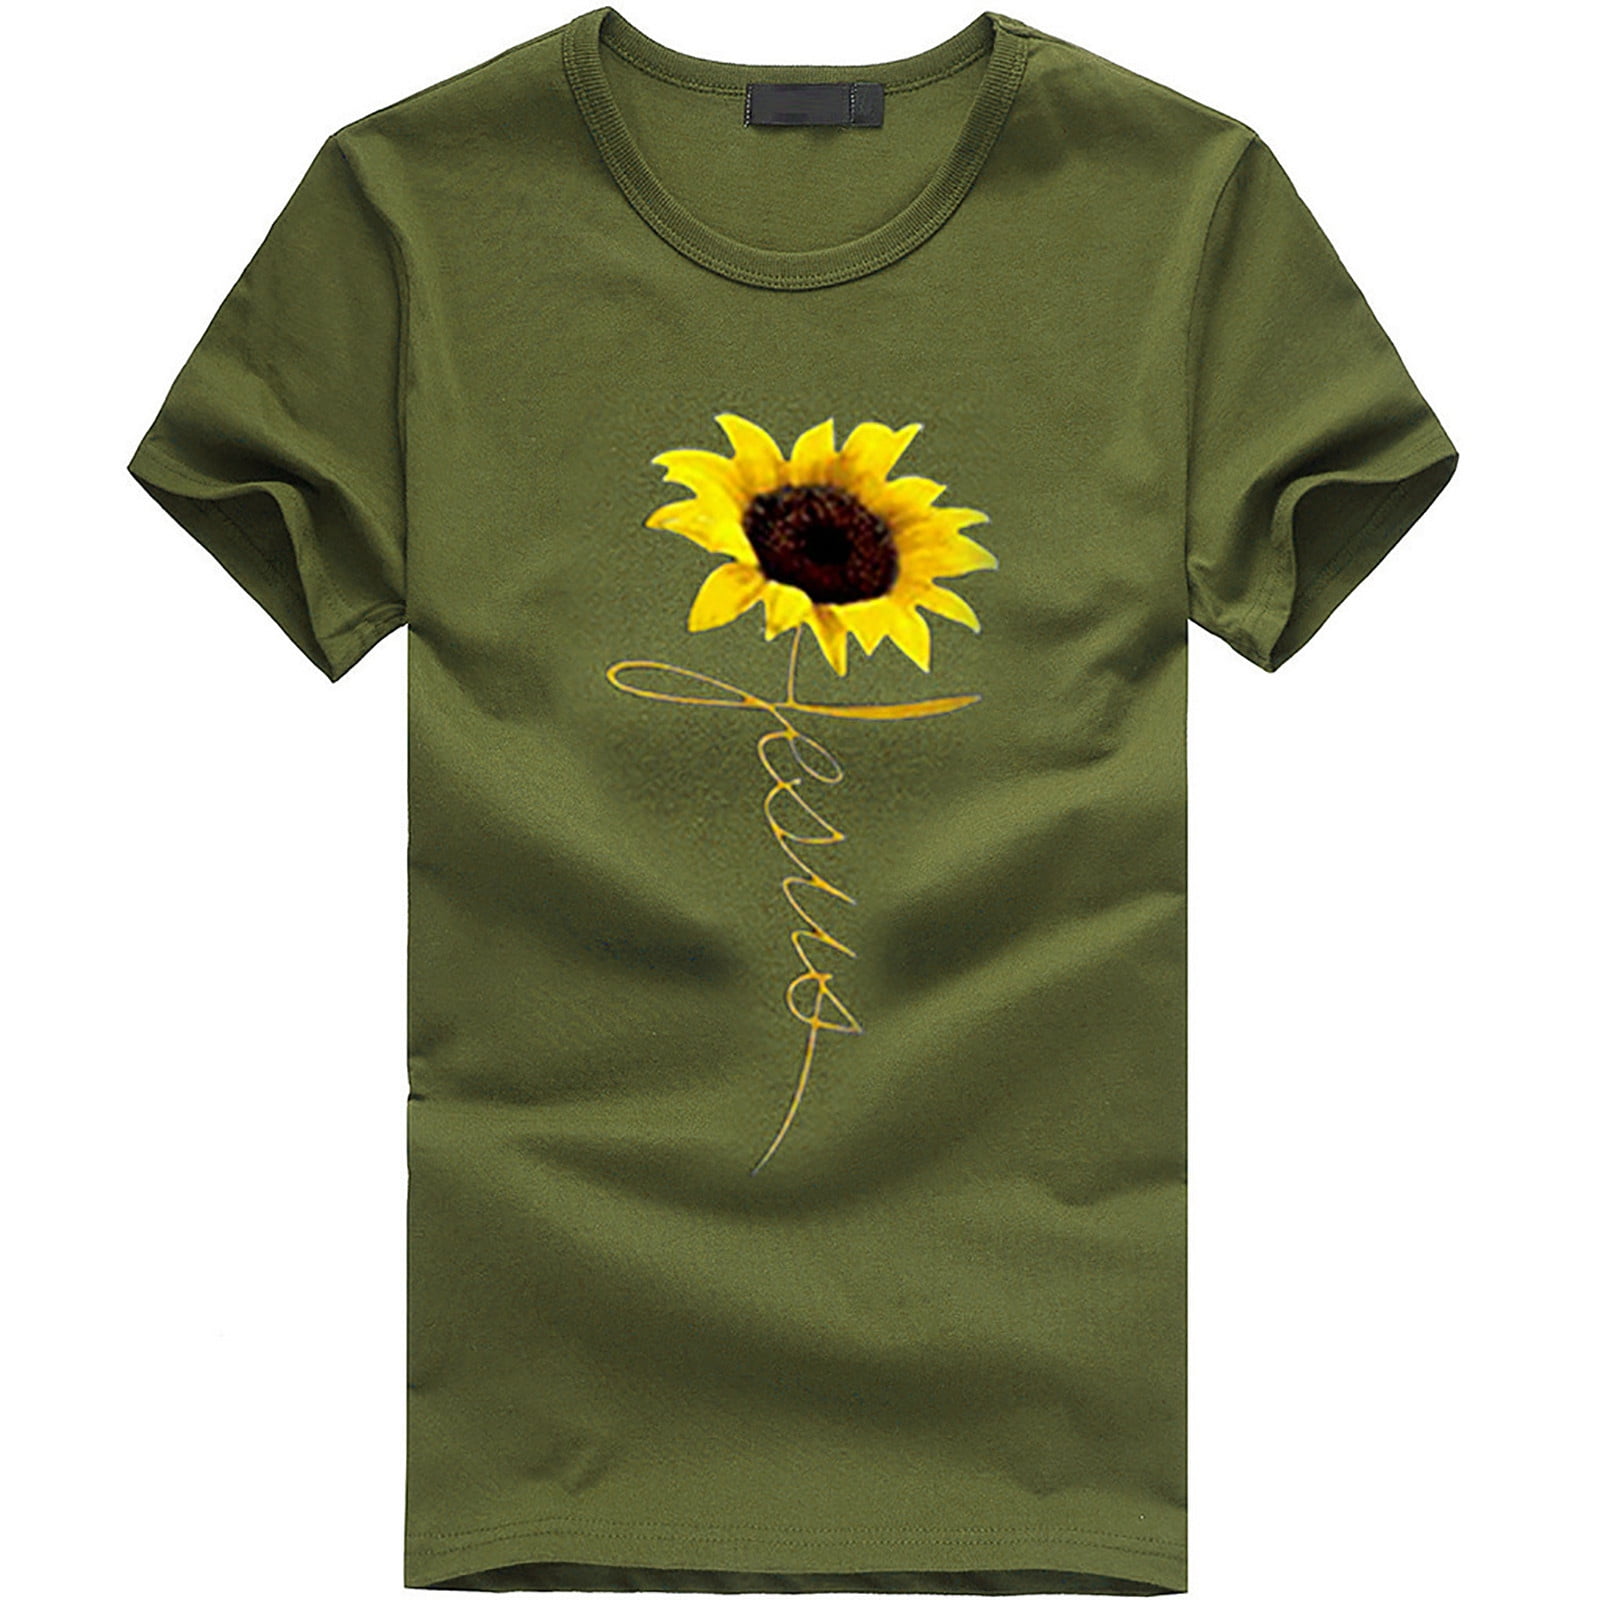 Kaitobe T-Shirts for Women Graphic Tees Love Heart Print Crewneck Short Sleeve Summer Tops Tees Shirts Blouses